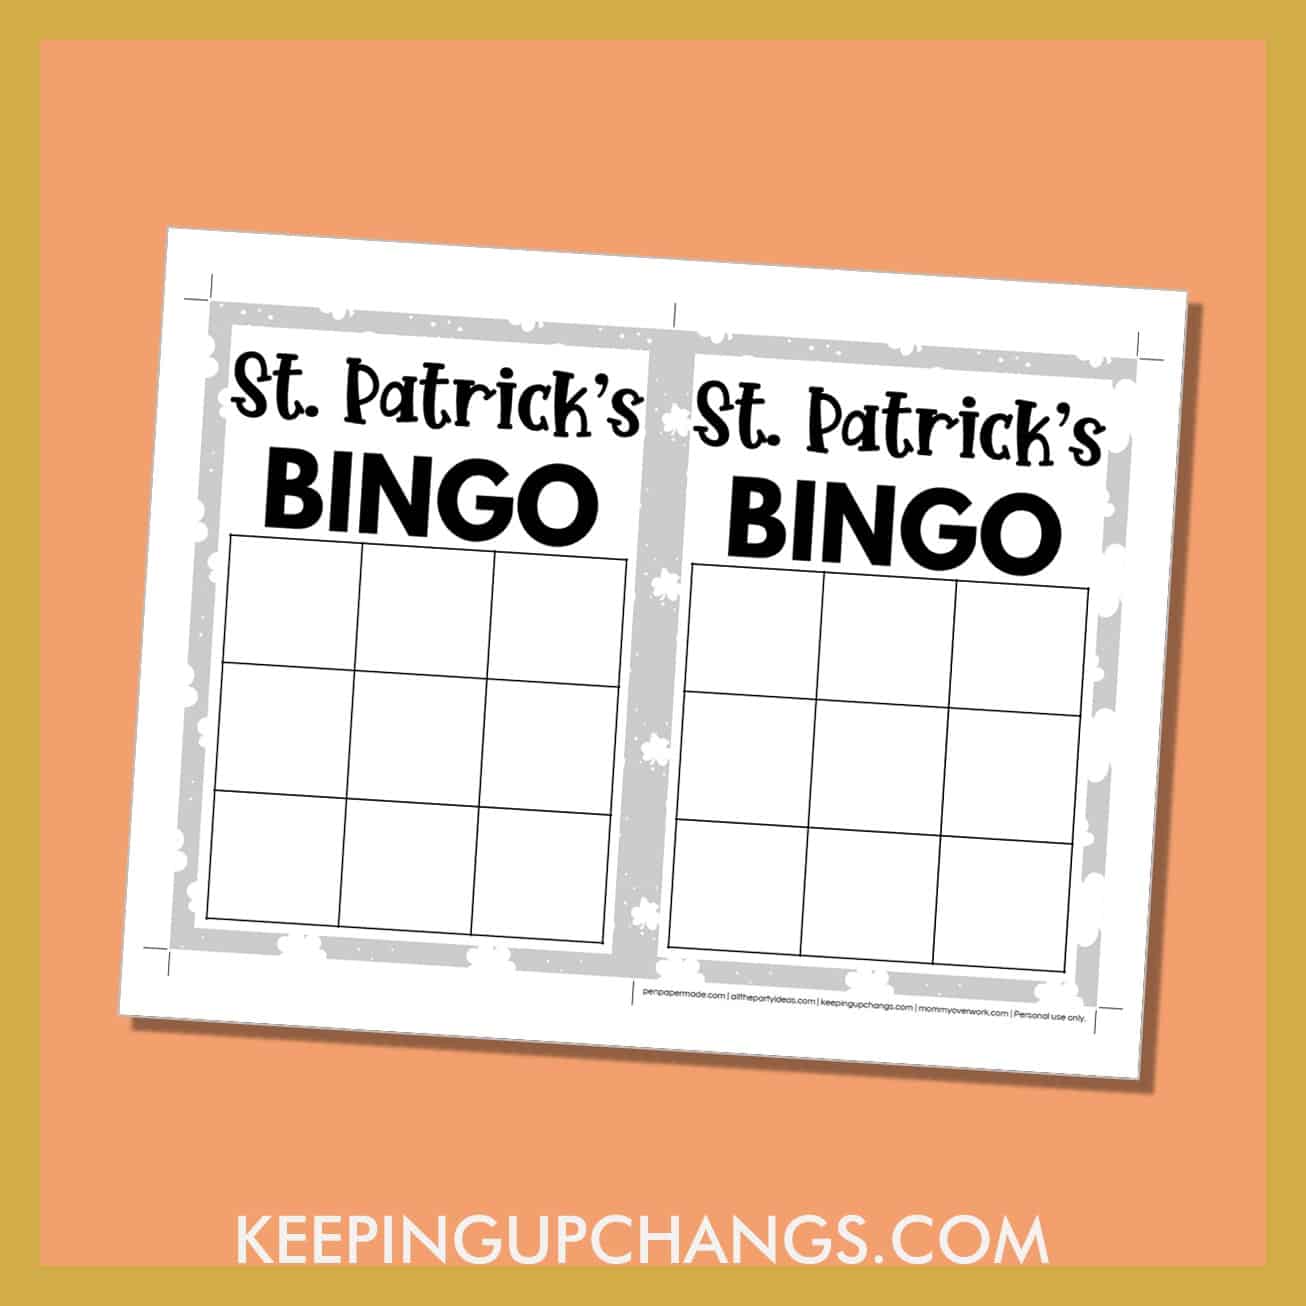 free st patrick's day bingo 3x3 grid black white game board blank template.